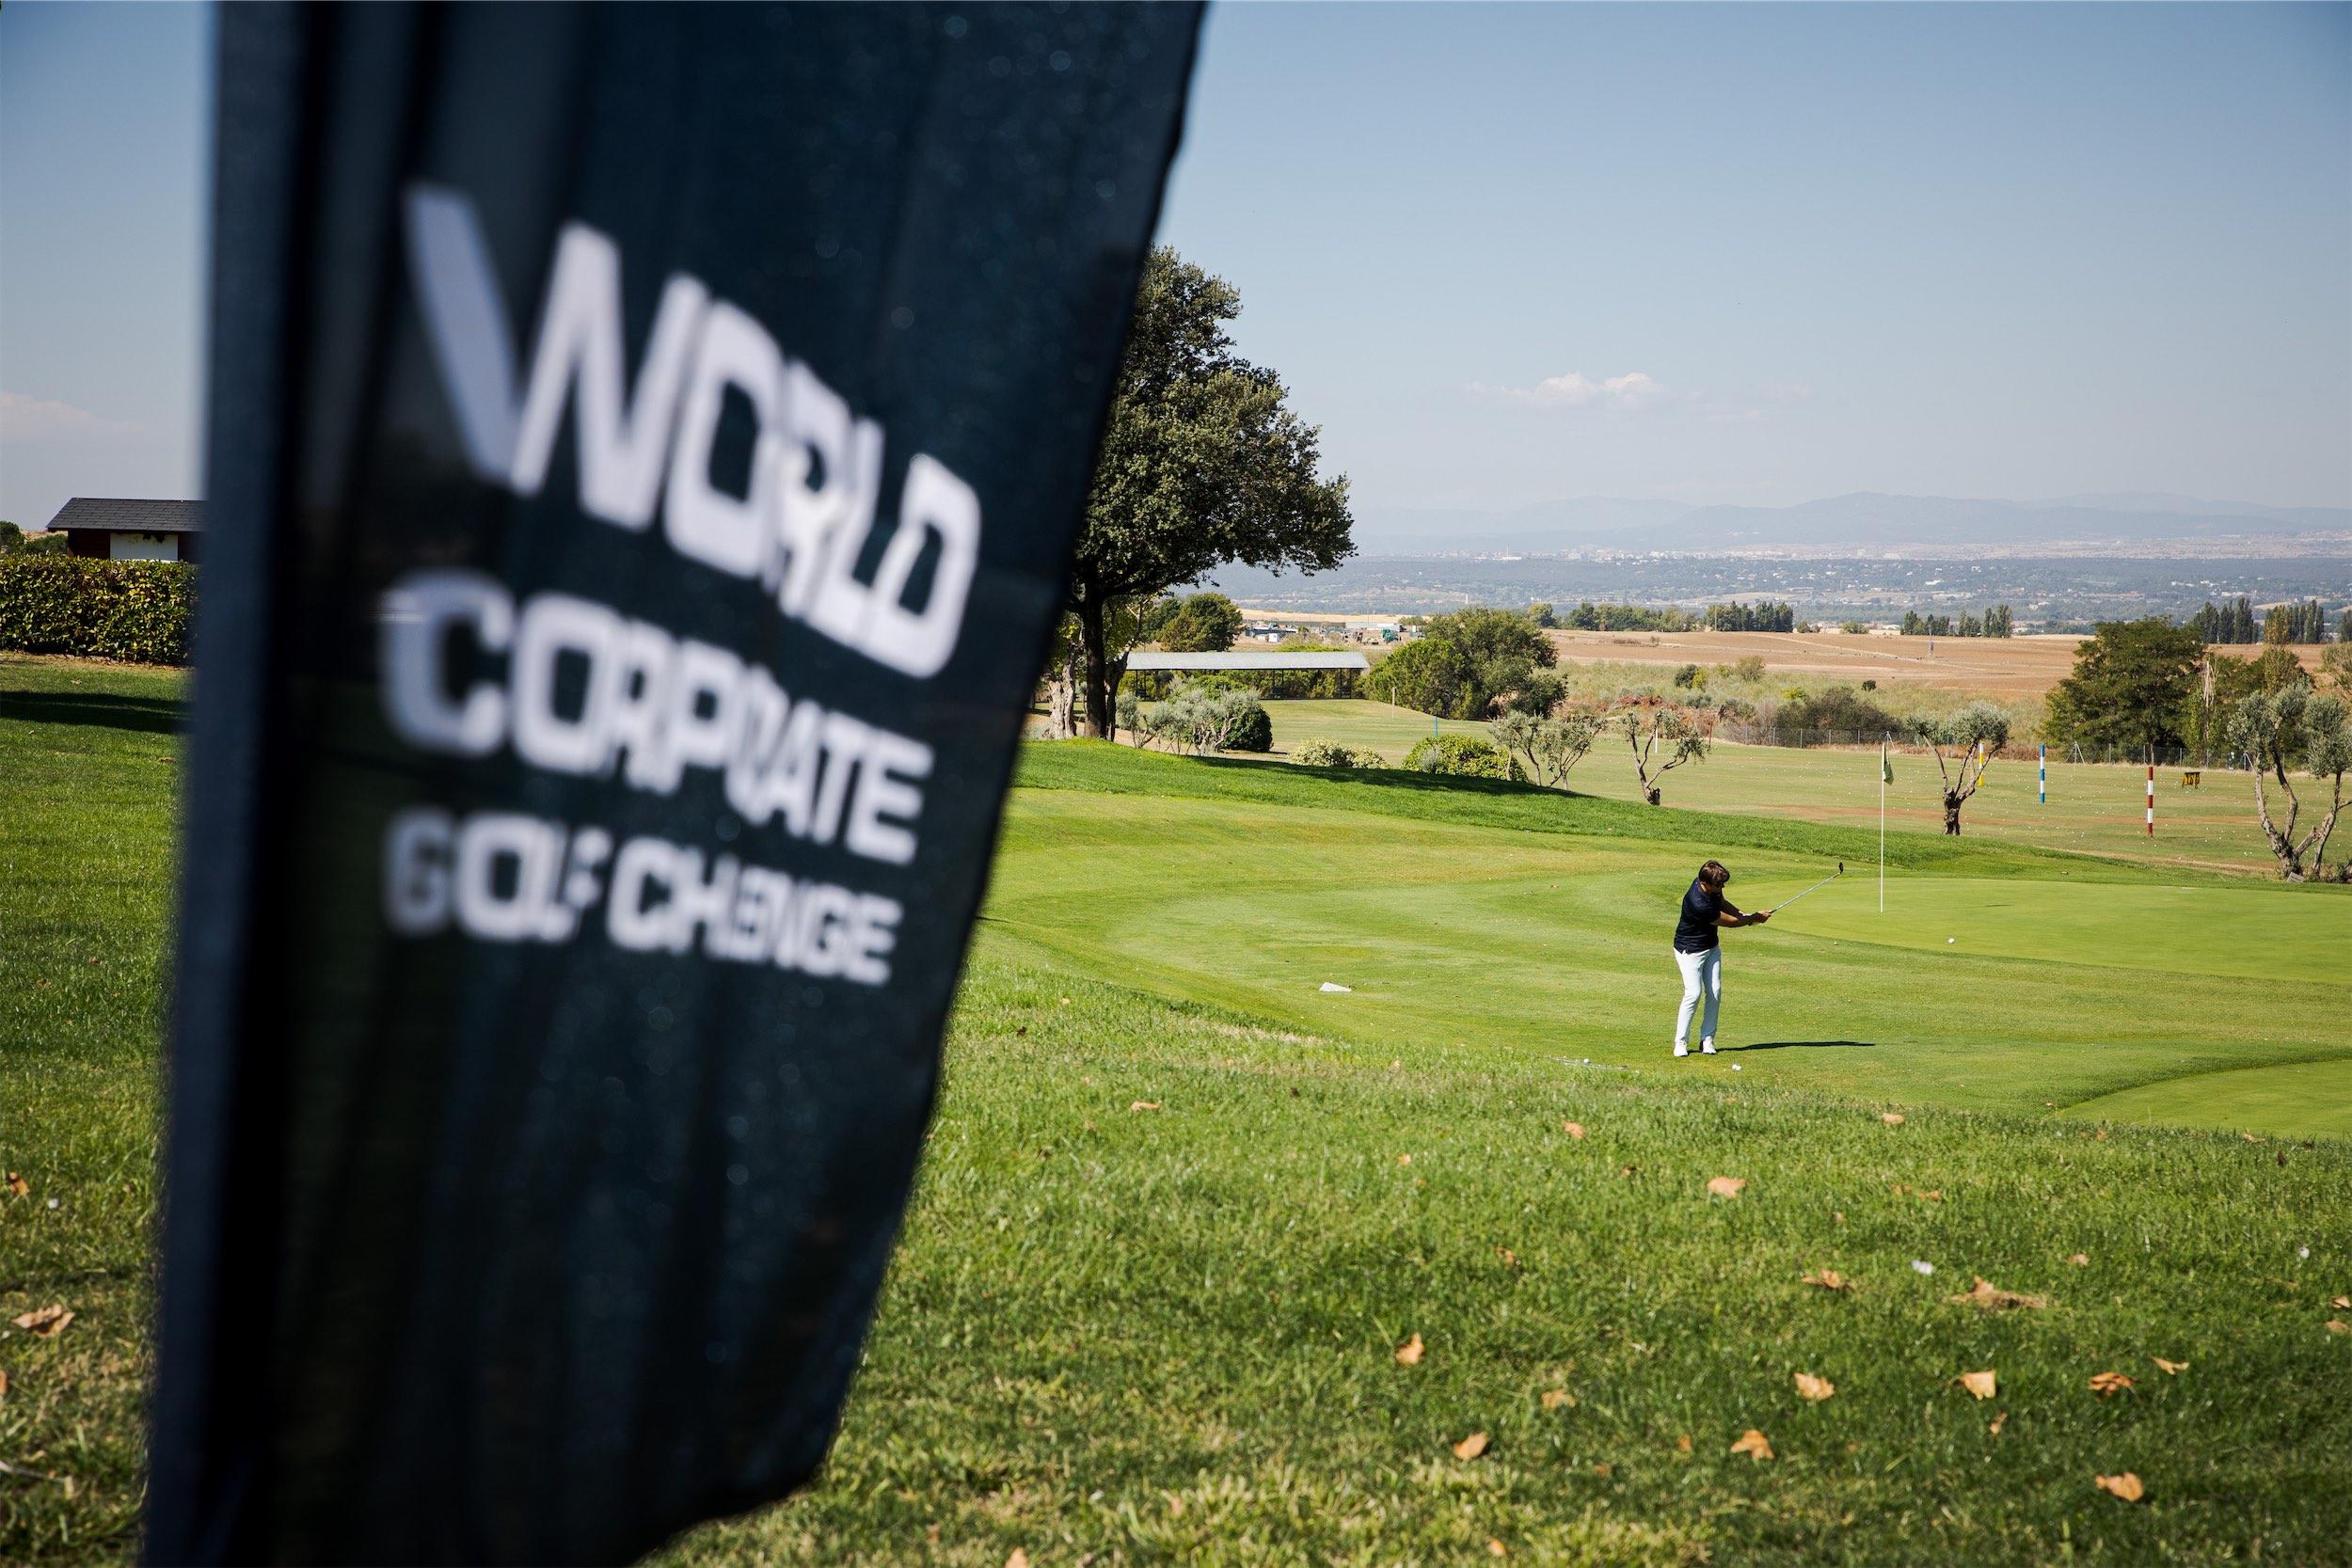 Copa Nordestada by World Corporate Golf Challenge